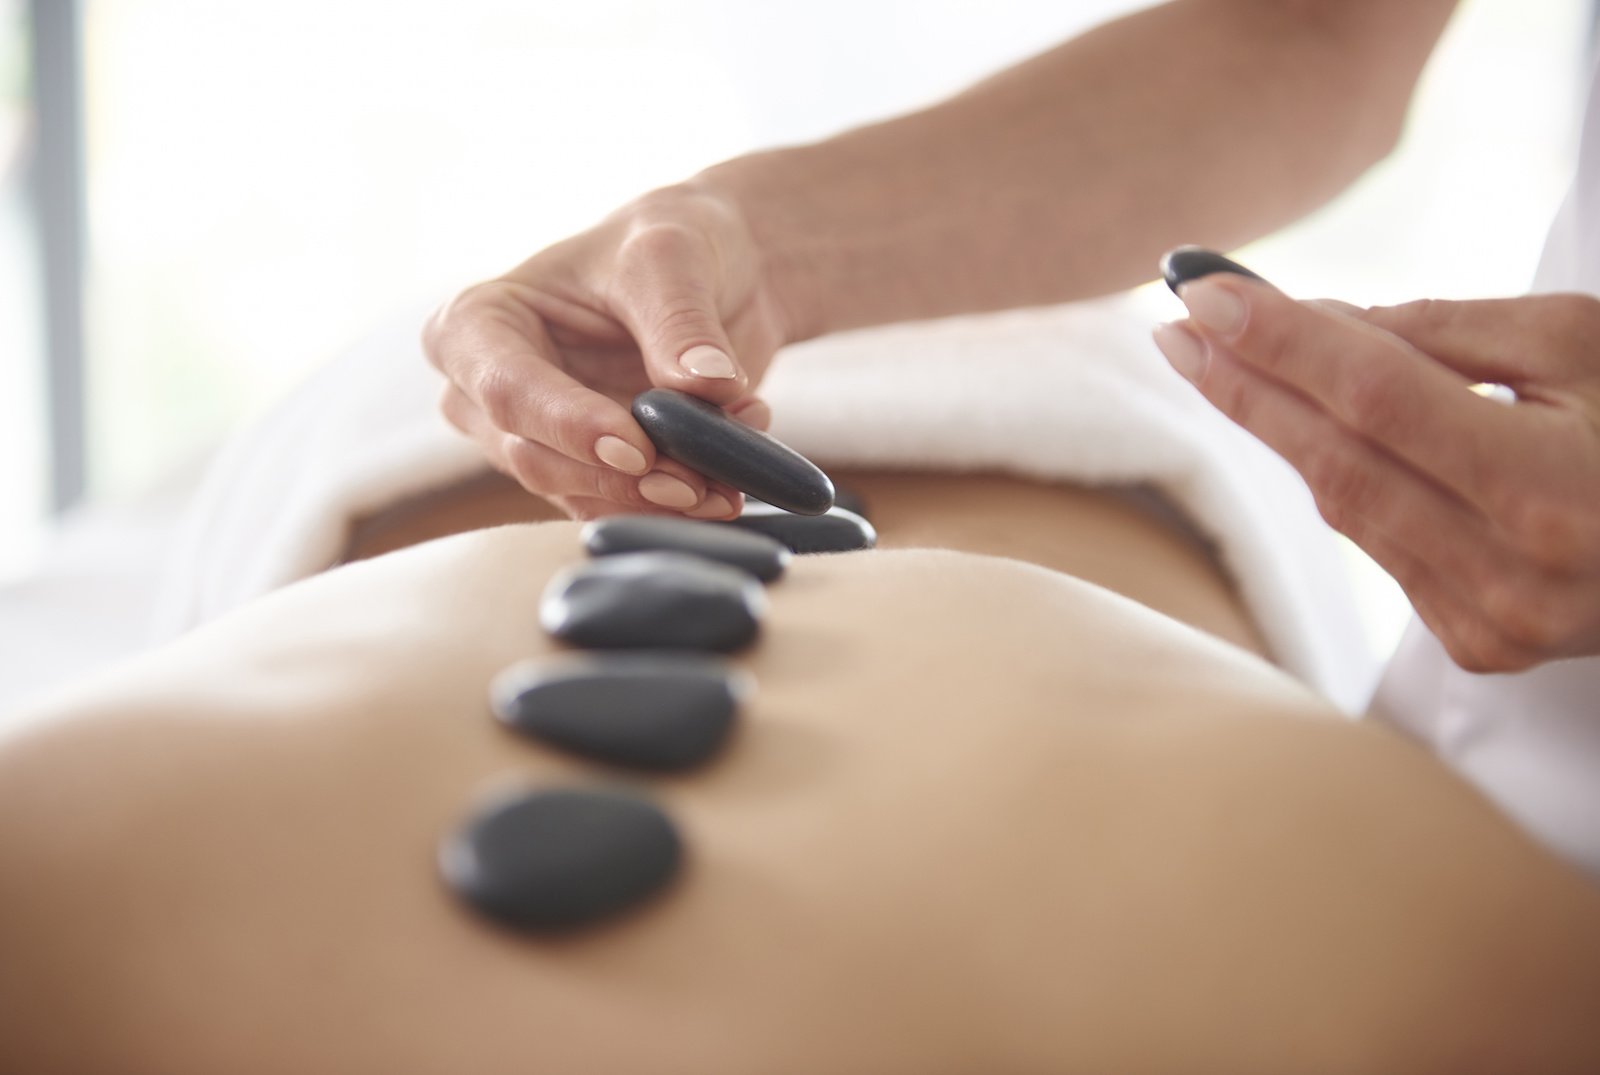 Hot stone massage benefits: A massage therapist places stones on a woman's back